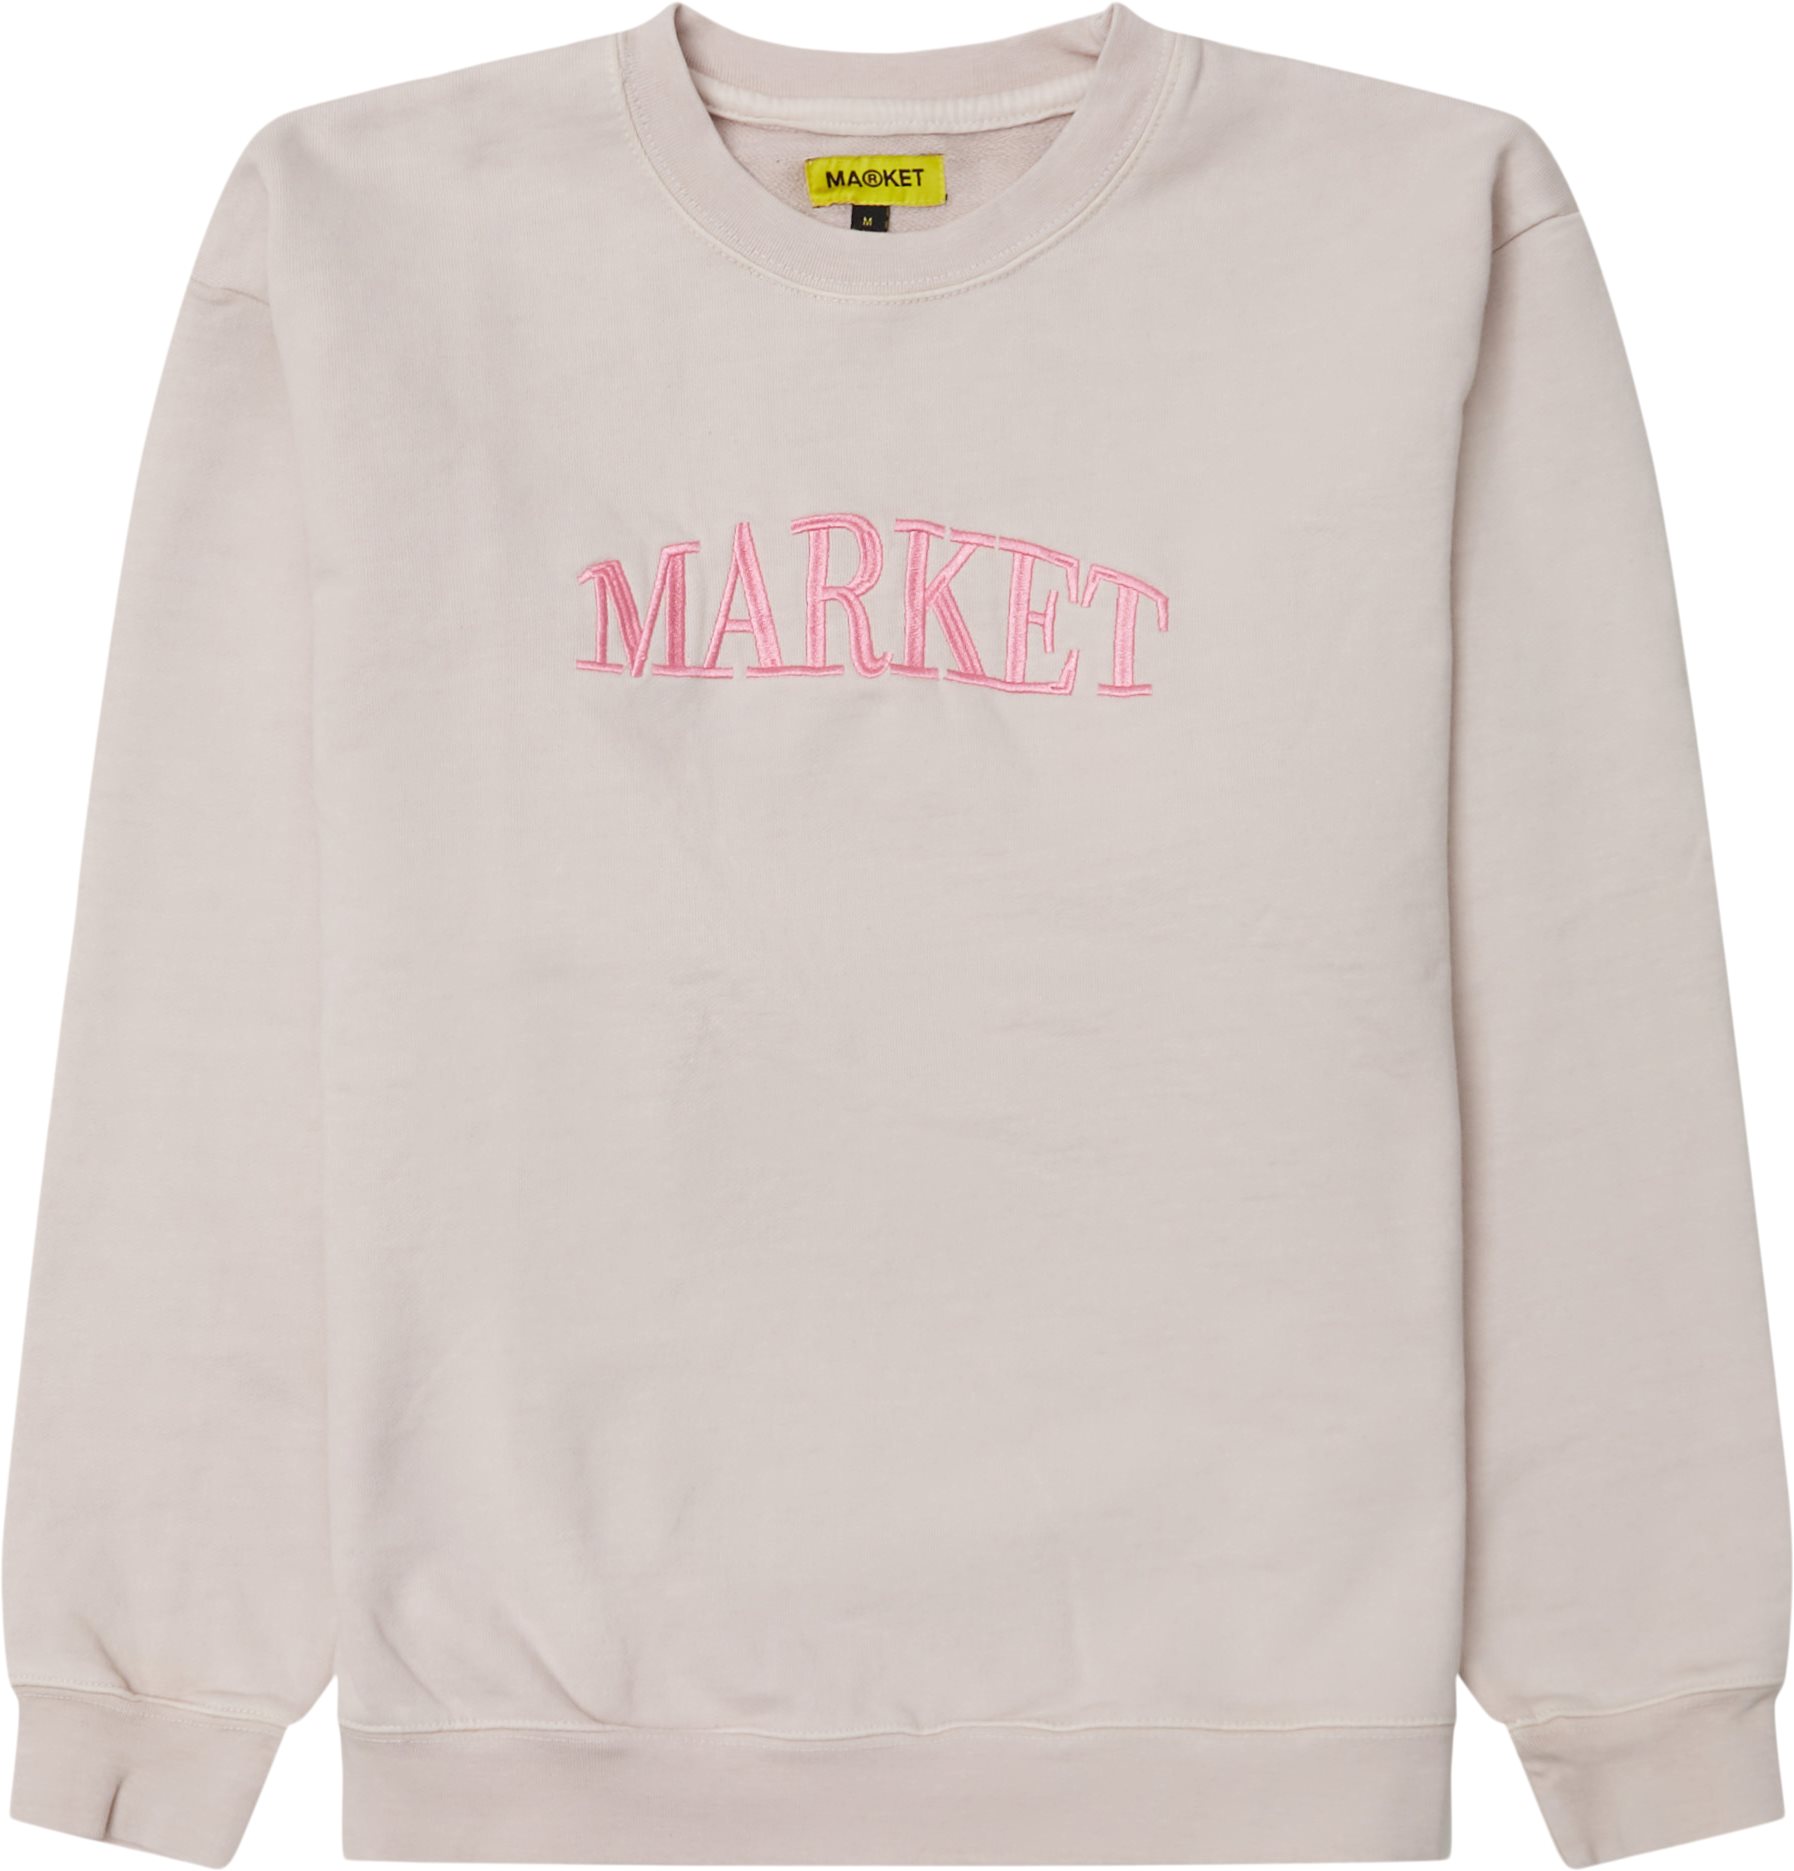 Market Sweatshirts MARKET BRIDGE ARC Pink